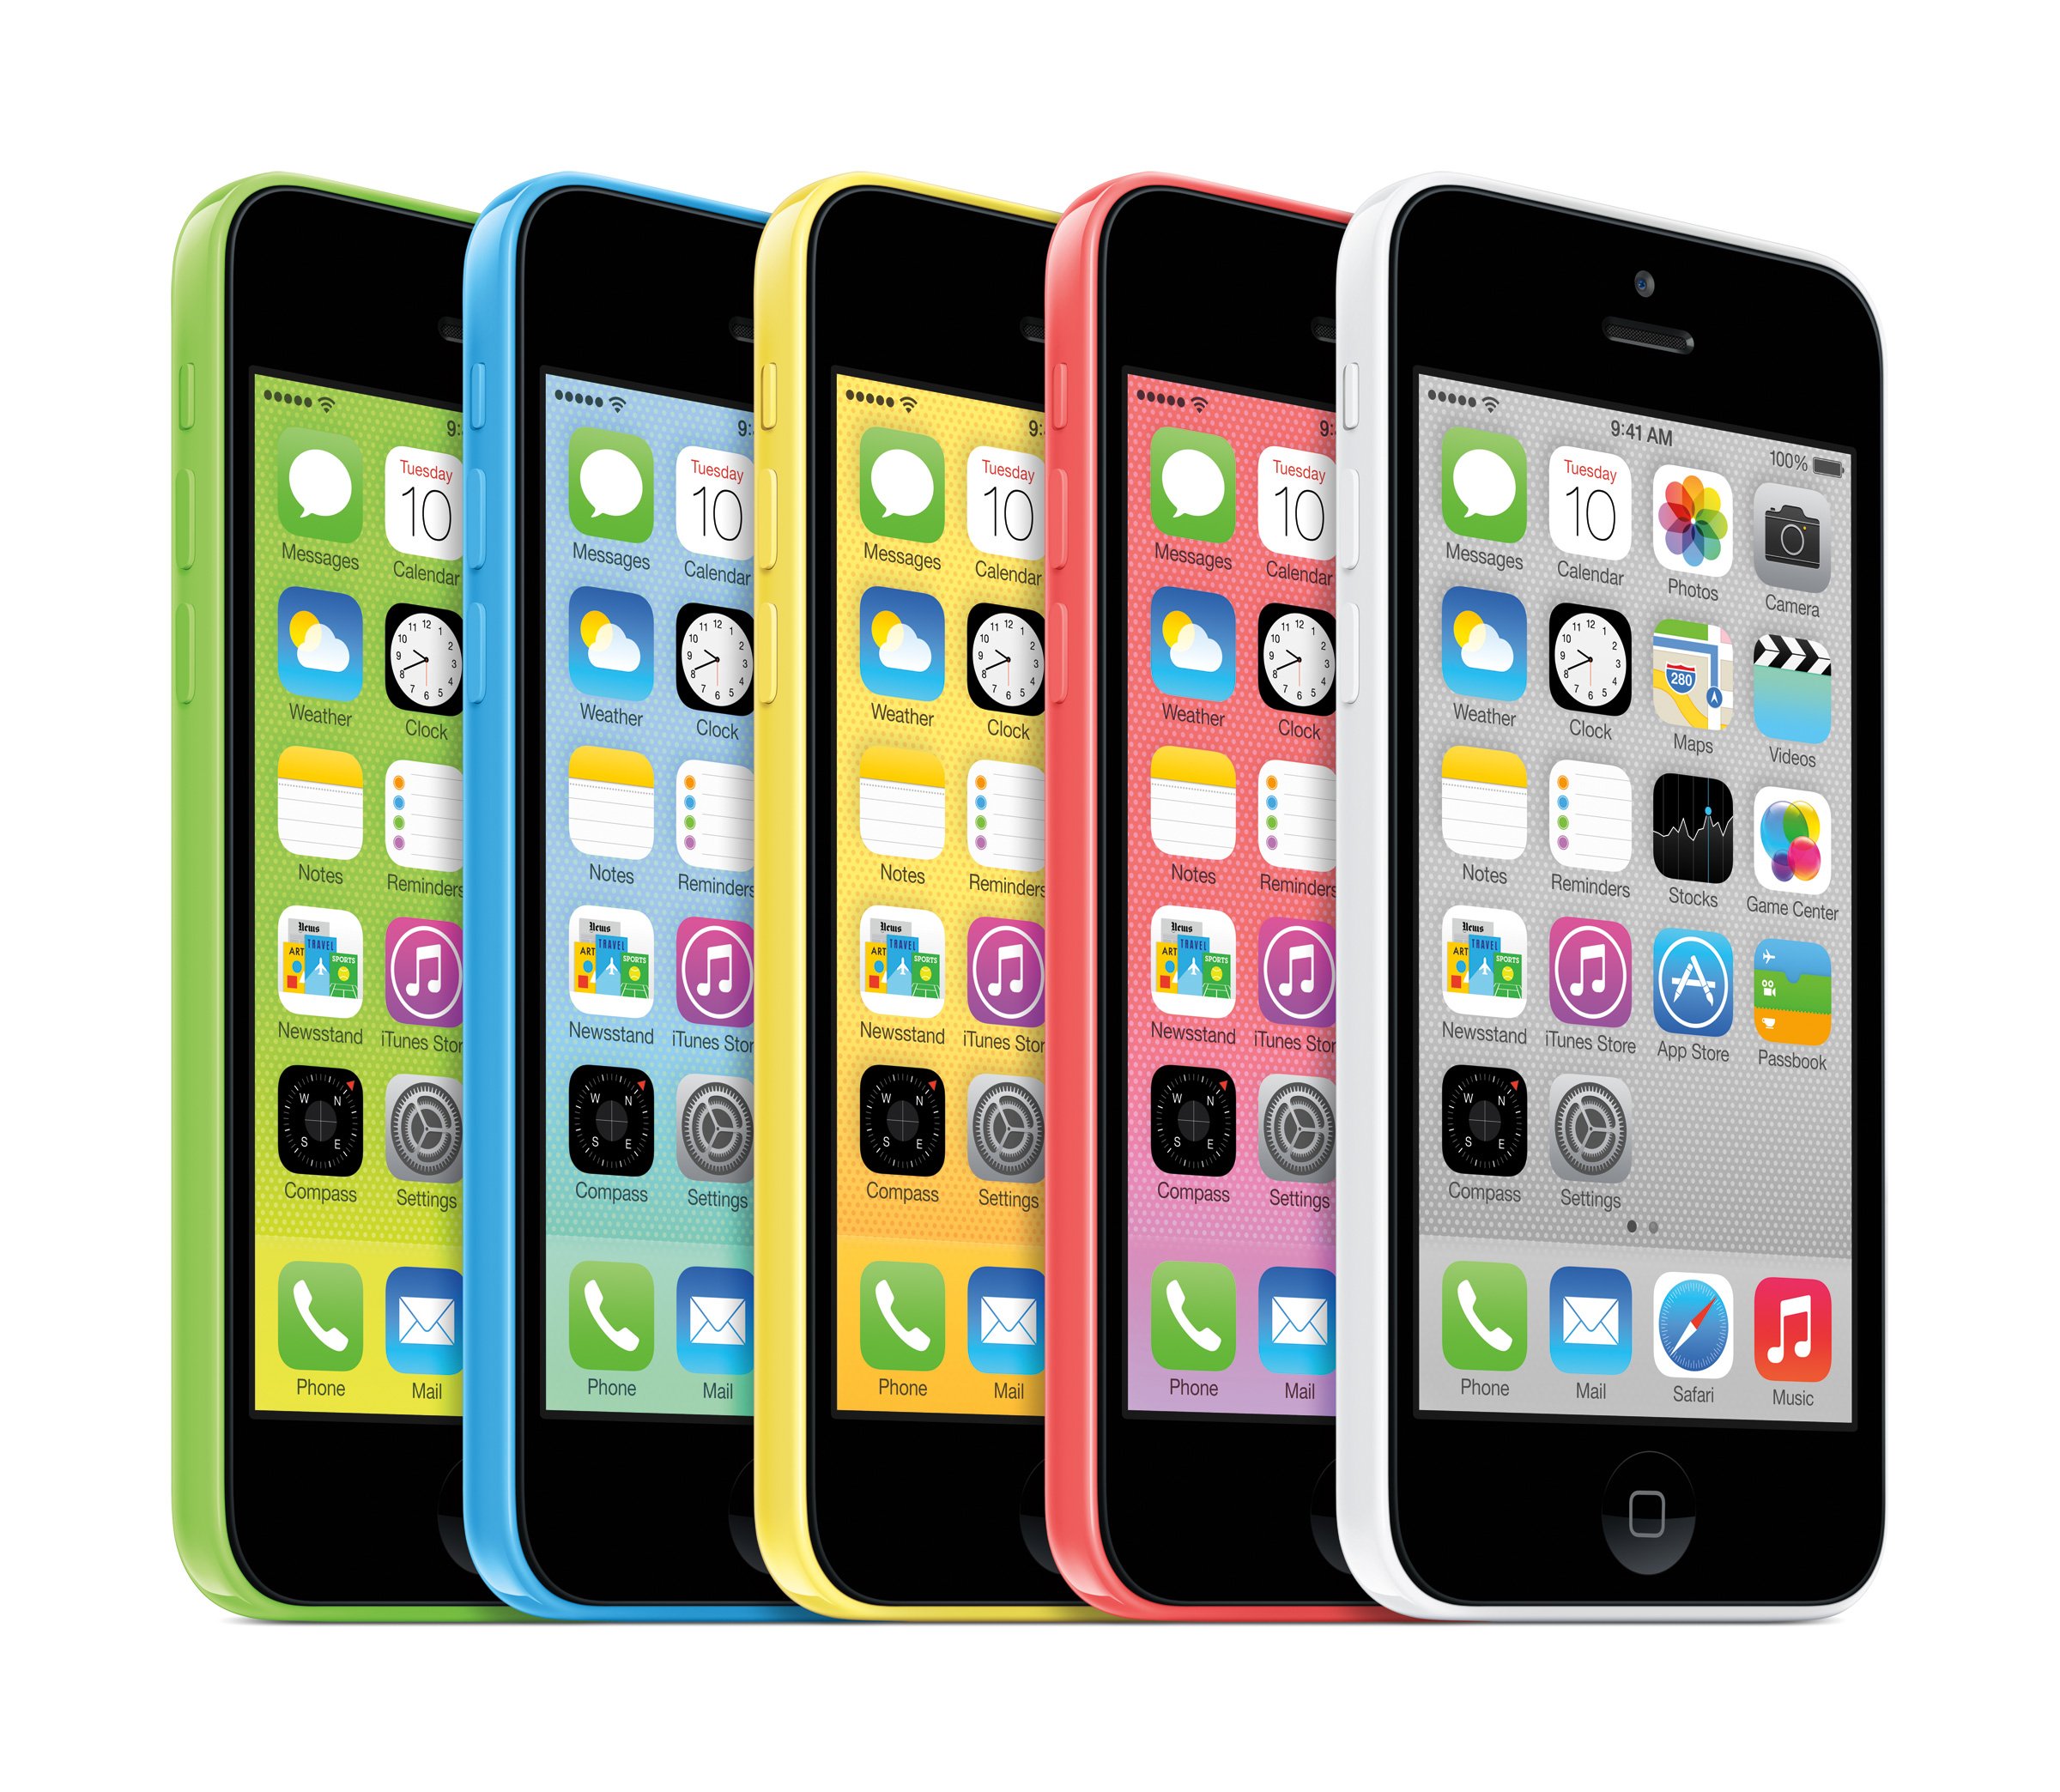 iPhone 5c image gallery